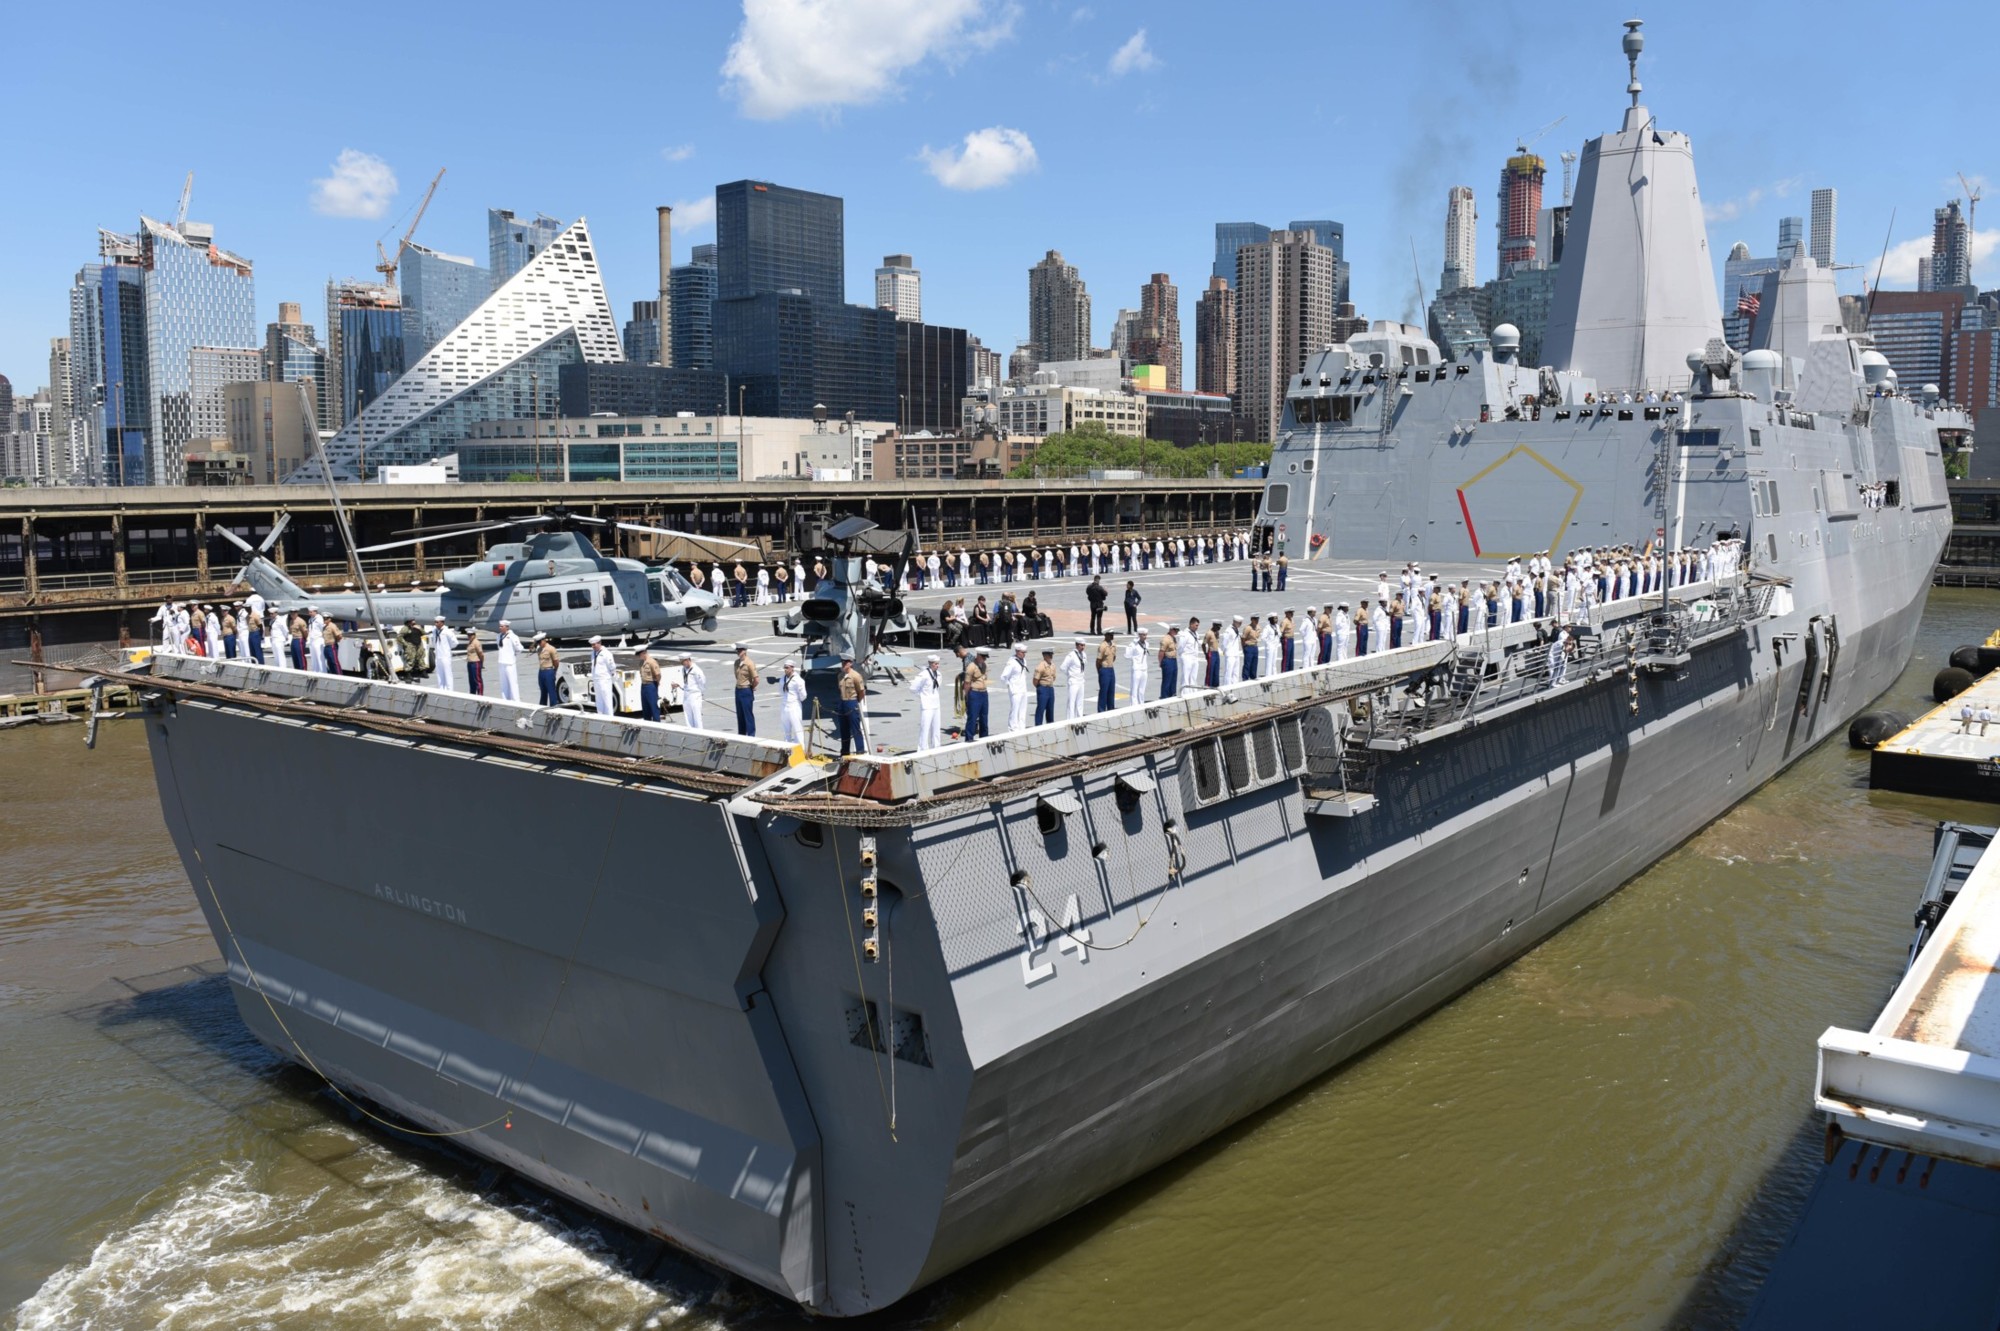 lpd-24 uss arlington san antonio class amphibious transport dock ship 17 fleet week new york 2018